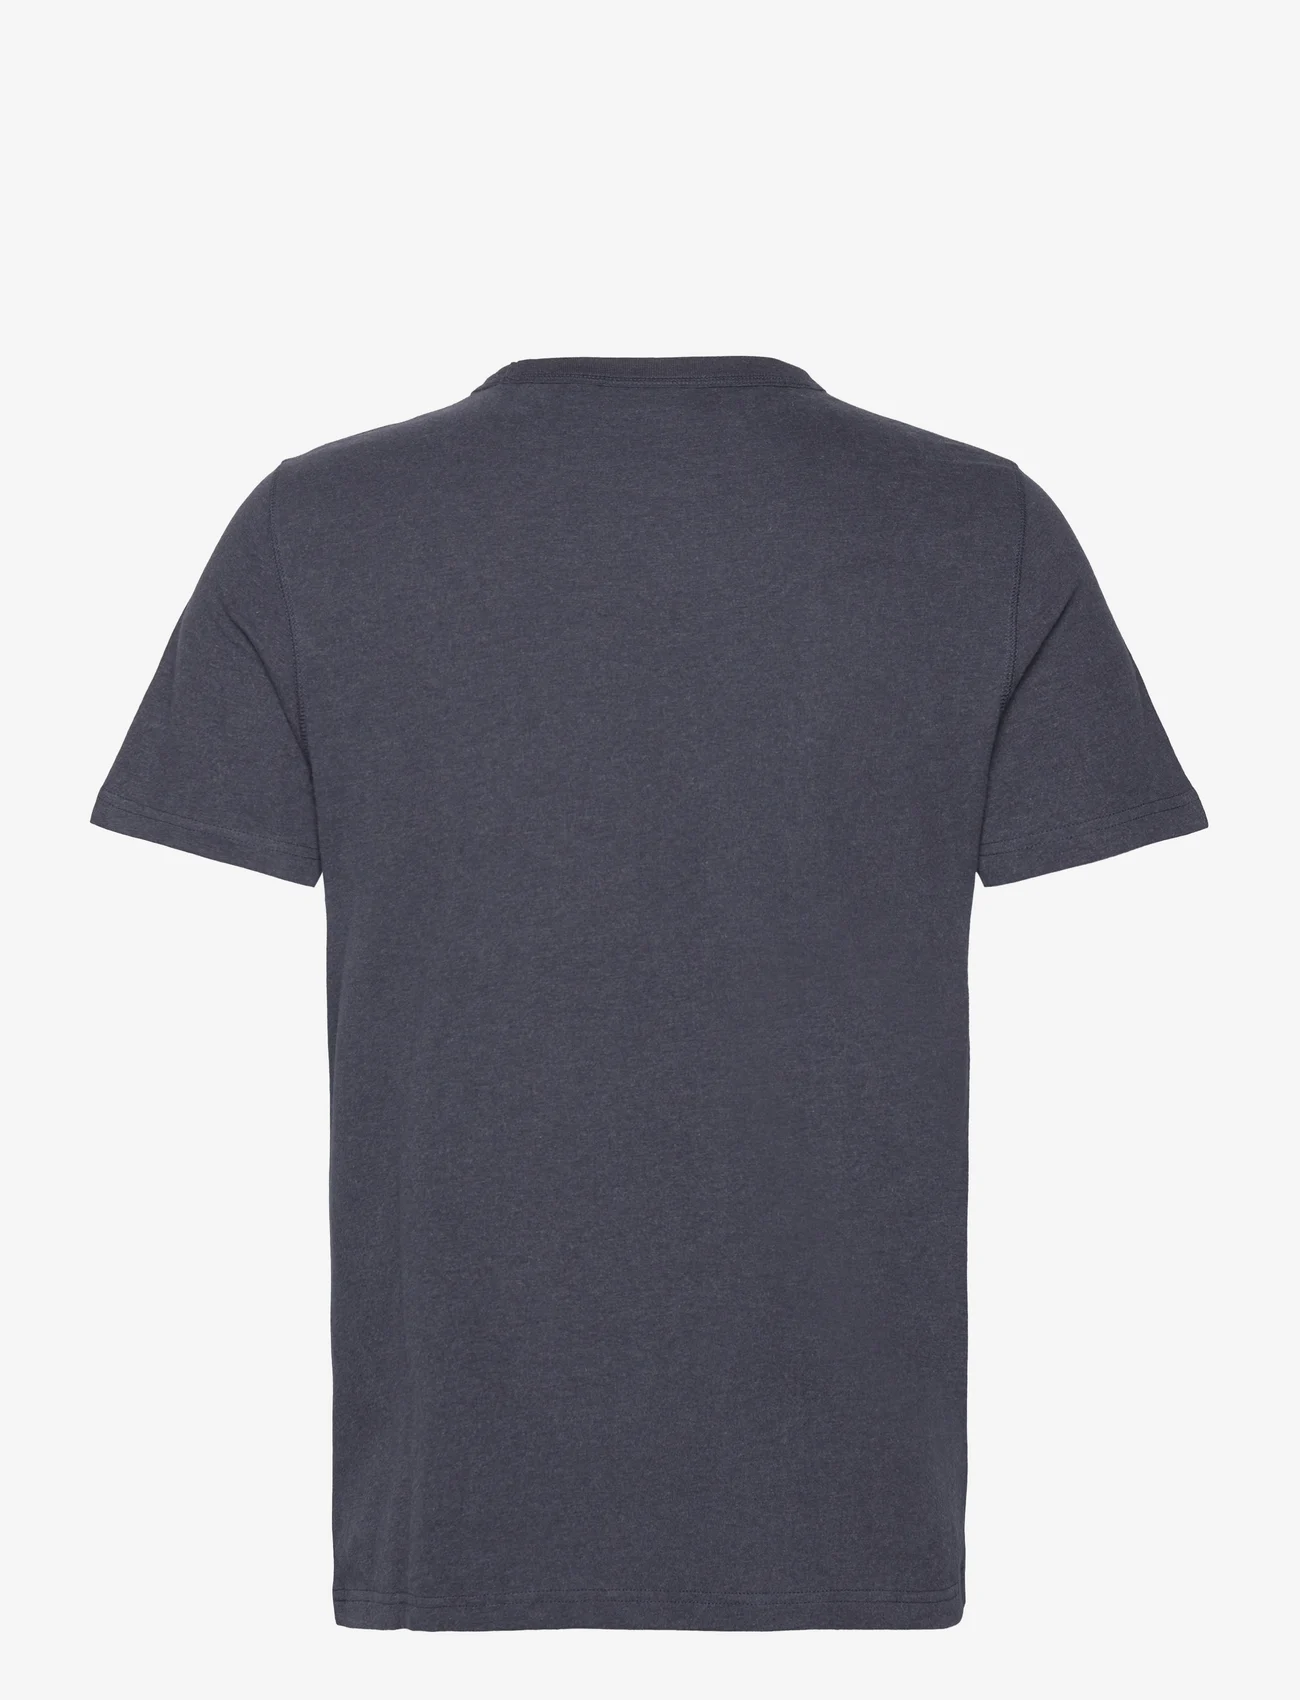 Morris - Halford Tee - kortärmade t-shirts - navy - 1